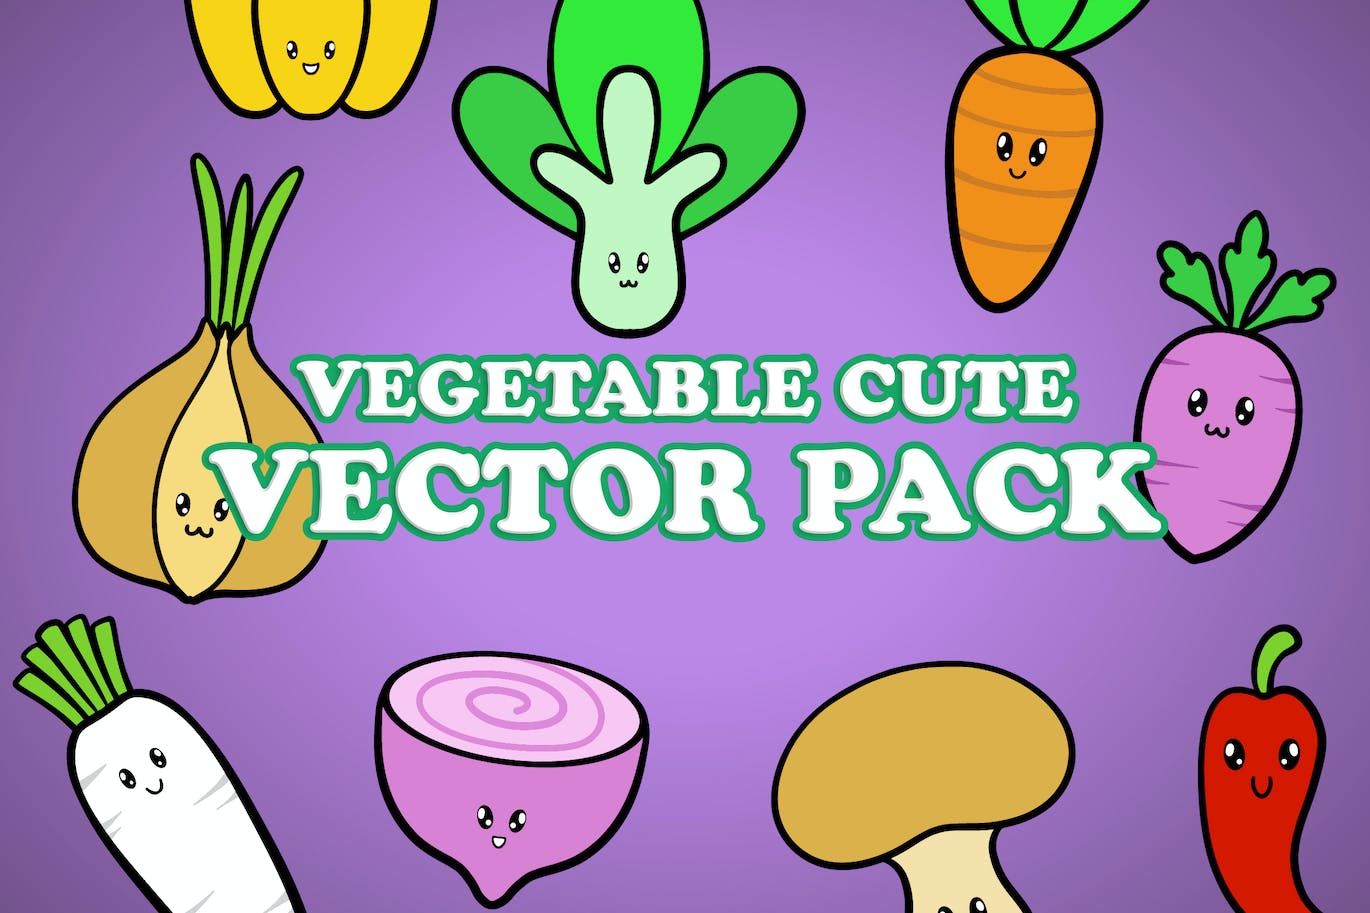 可爱的蔬菜角色插画素材 Cute Vegetable Character Illustration Pack 设计素材 第1张